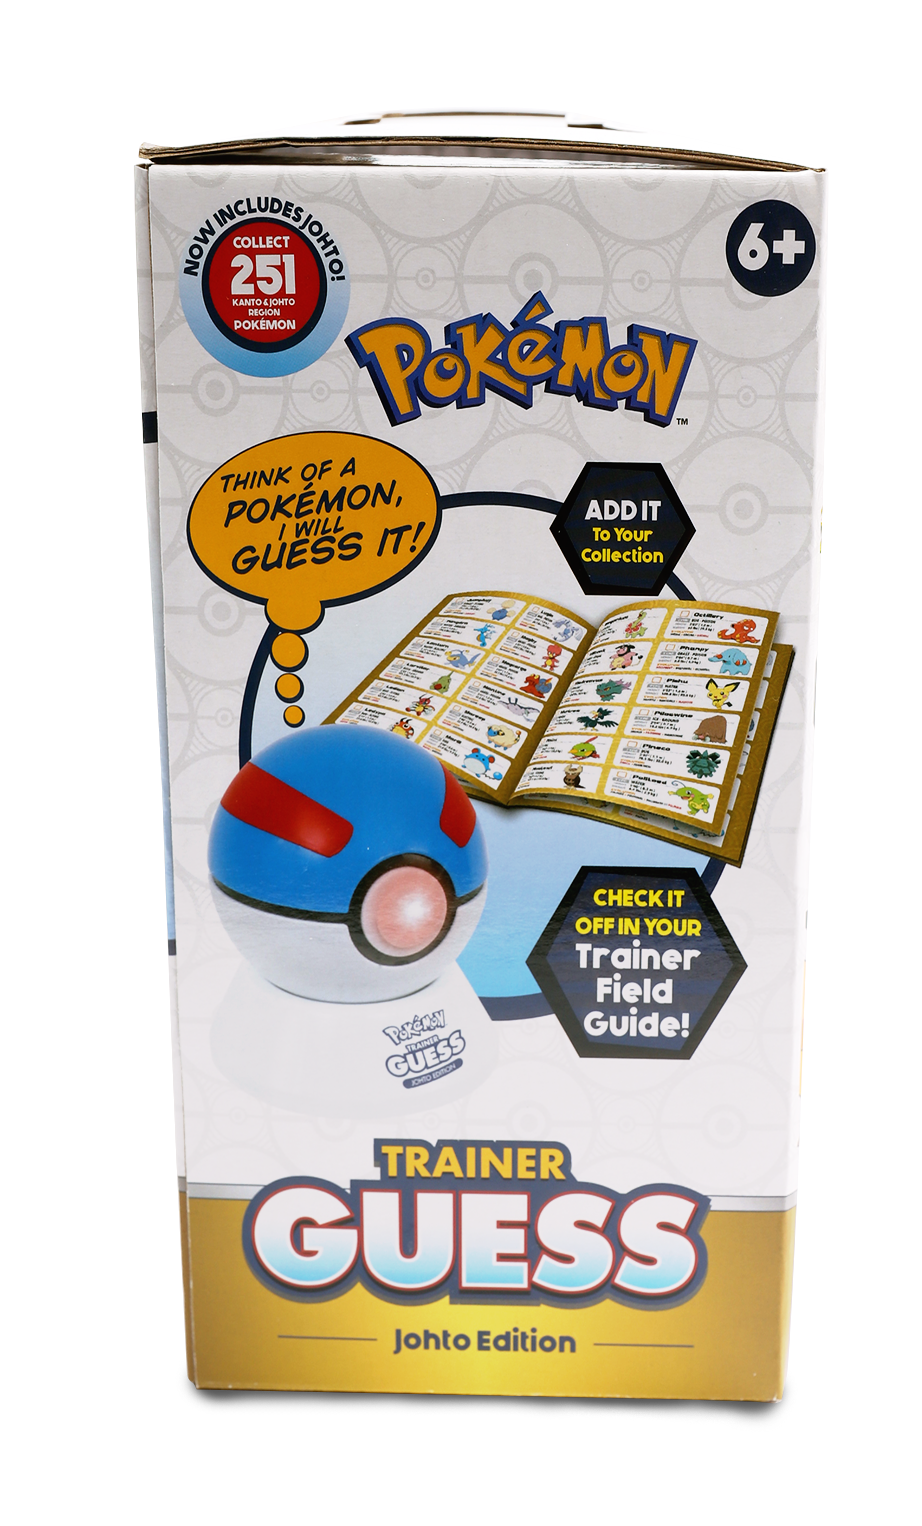 Pokemon Trainer Guess Johto Edition